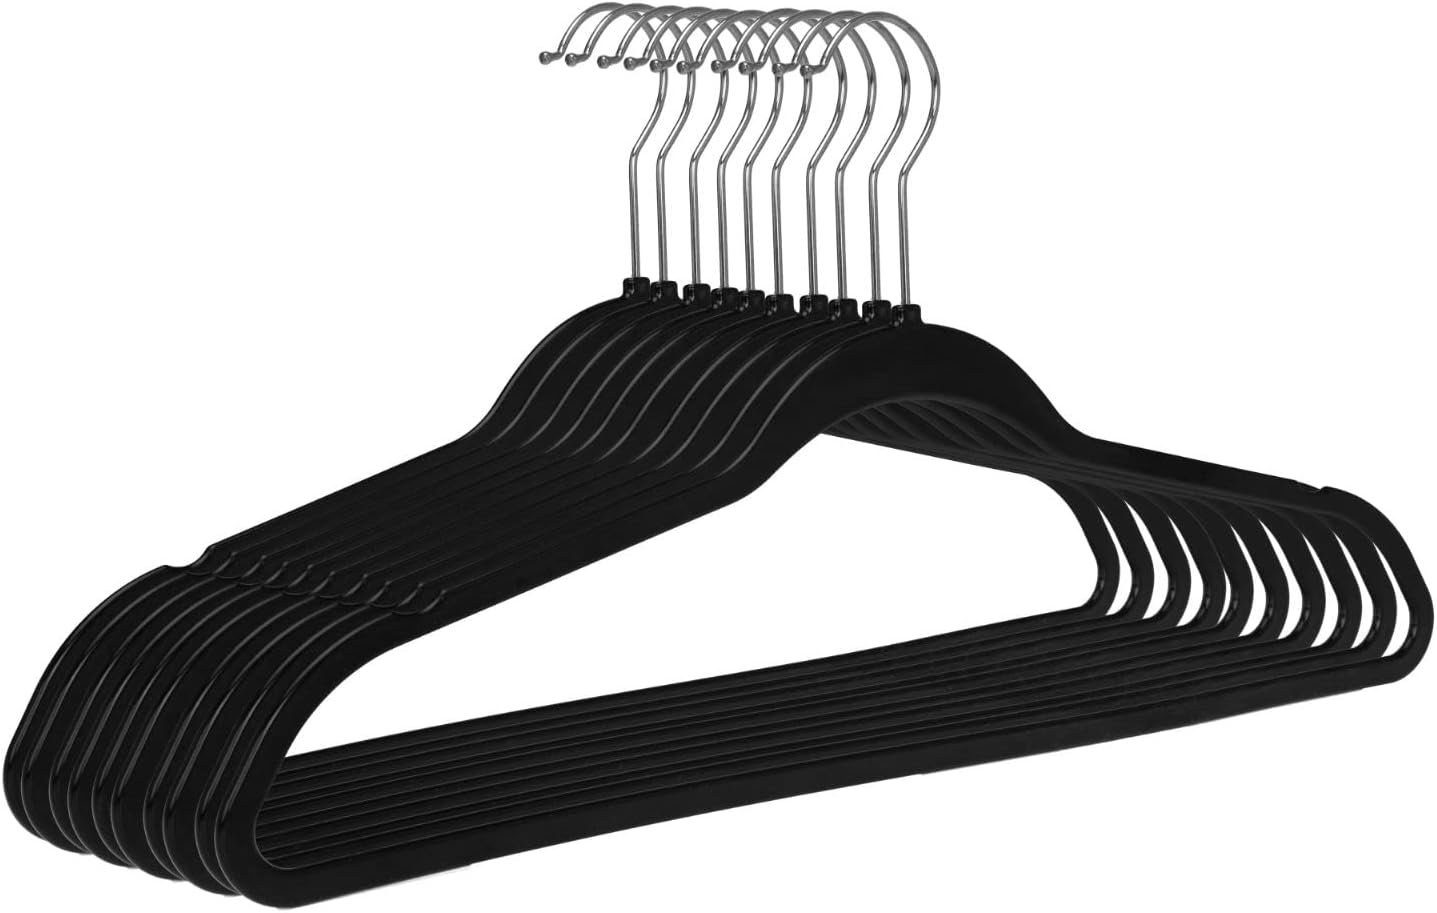 https://bigbigmart.com/wp-content/uploads/2023/12/Quality-Hangers-Clothes-Hangers-200-Pack-Non-Velvet-Plastic-Hangers-for-Clothes-Heavy-Duty-Coat-Hanger-Space-Saving-Closet-Hangers-with-Chrome-Swivel-Hook-Functional-Non-Flocked-Hangers-Black5.jpg